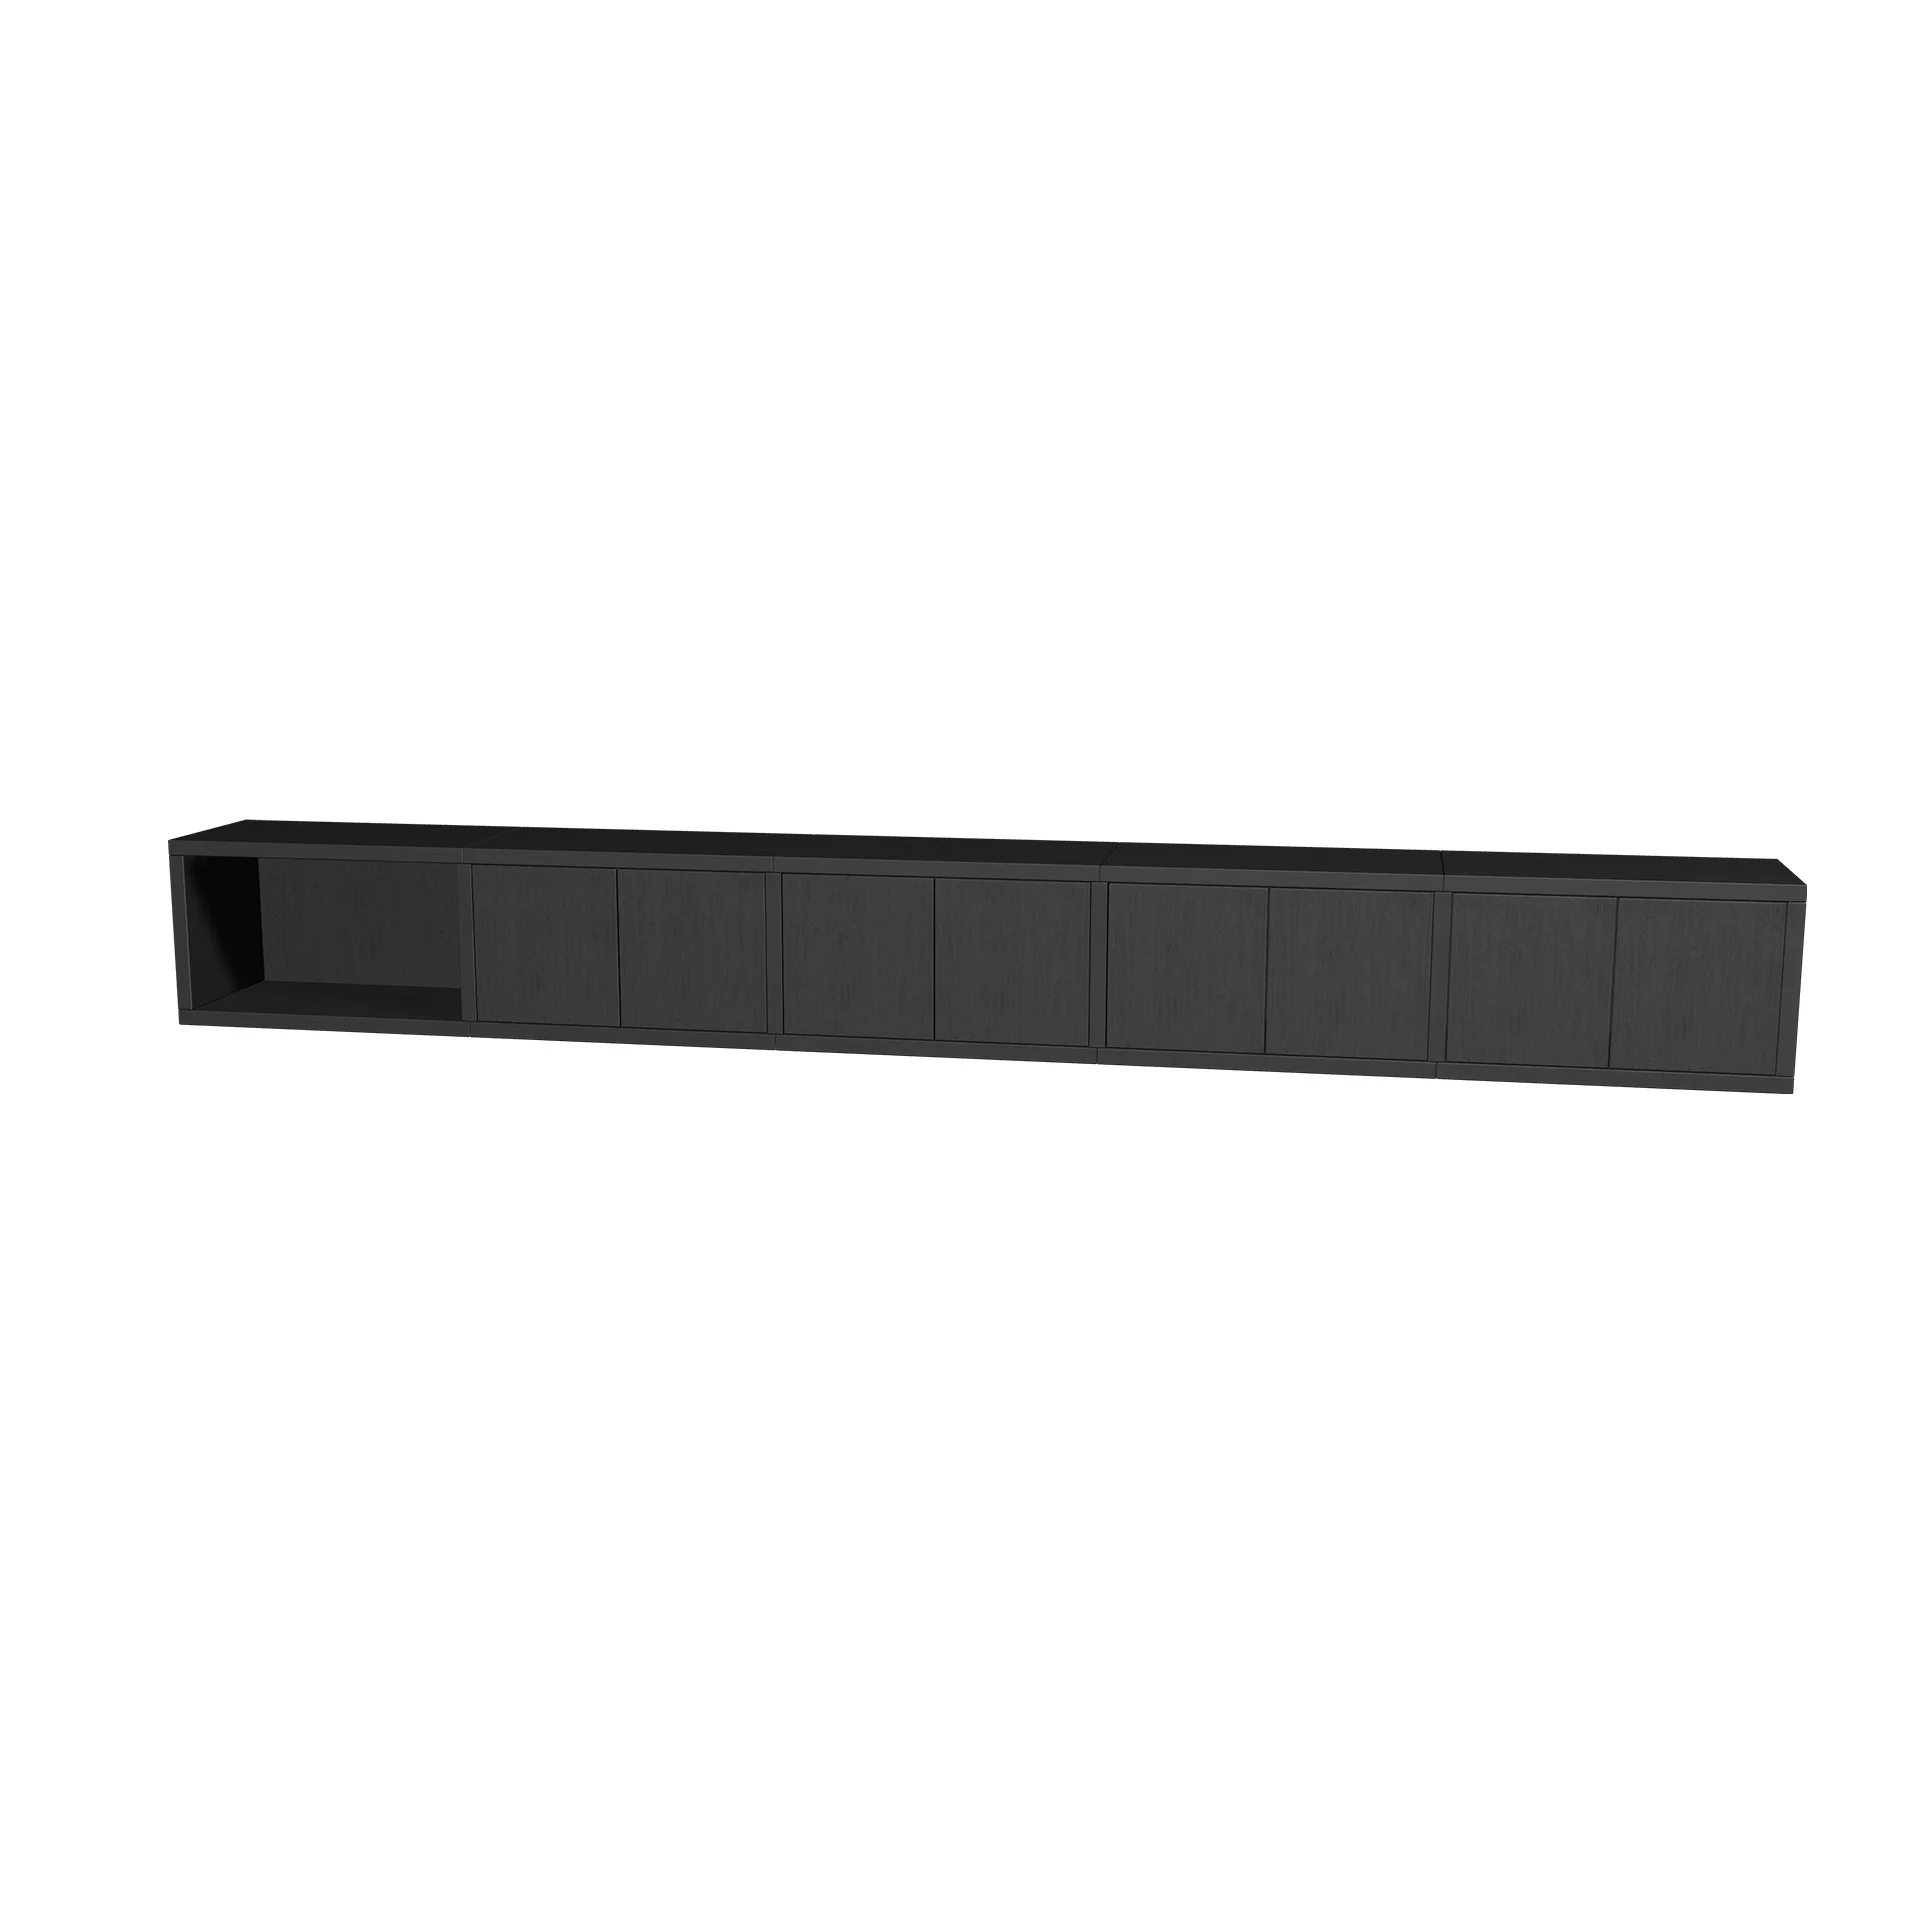 TSFC013 en panel mueble roble negro